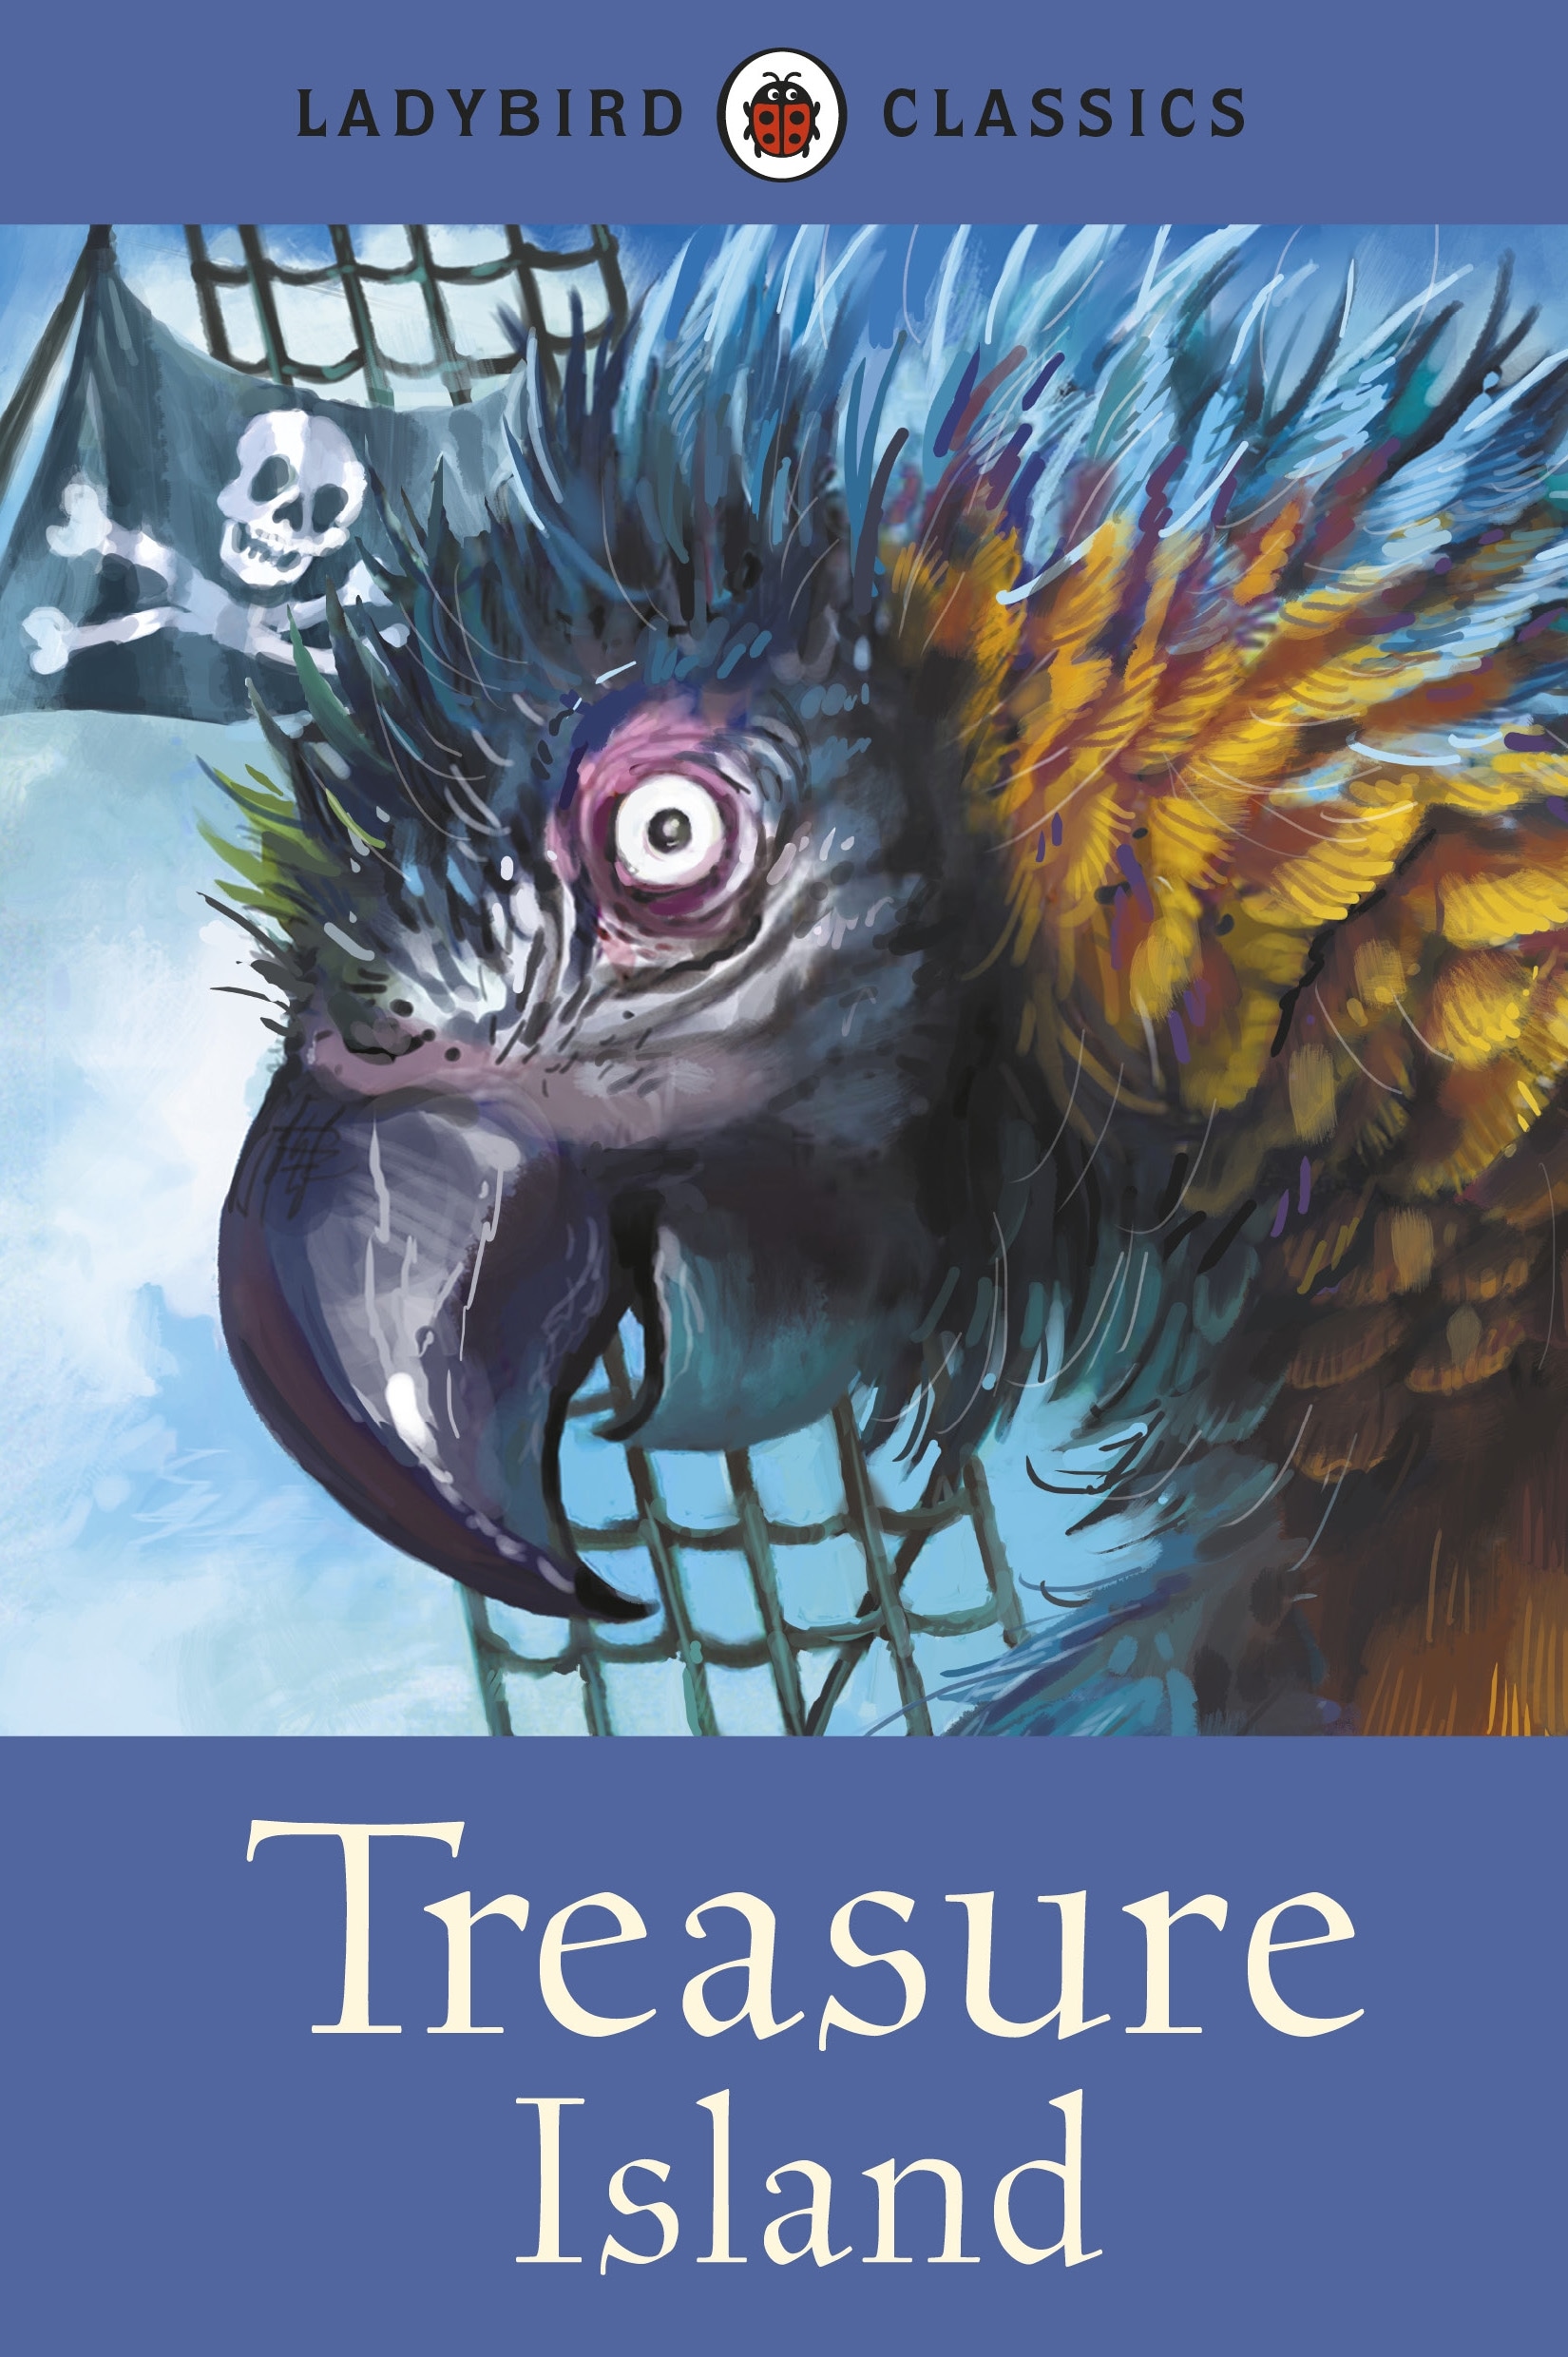 Book “Ladybird Classics: Treasure Island” by Robert Louis Stevenson — July 5, 2012